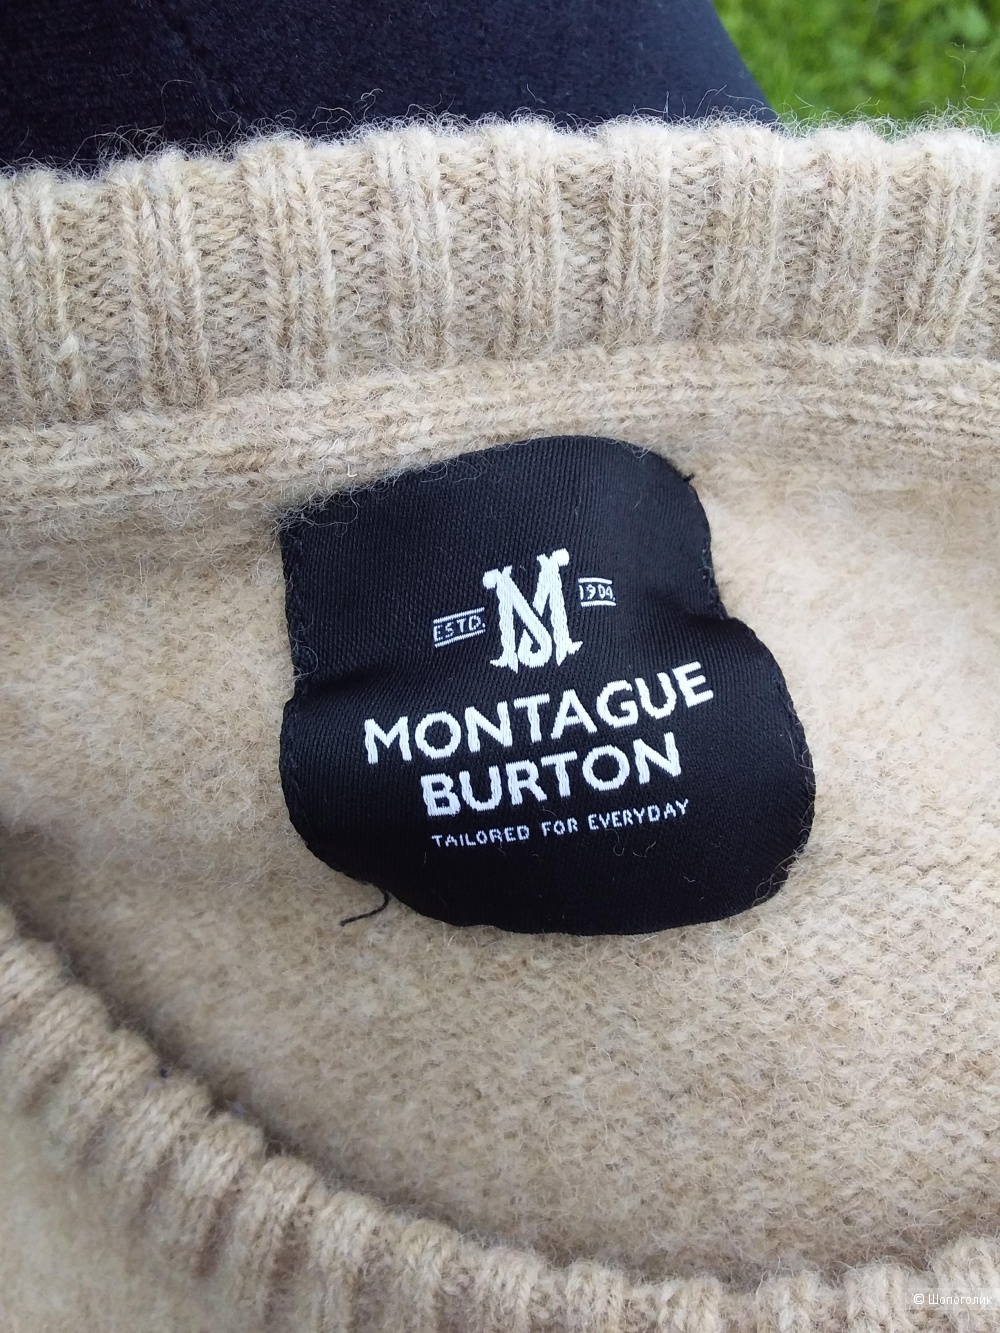 Джемпер/свитер montague burton, р-р 44